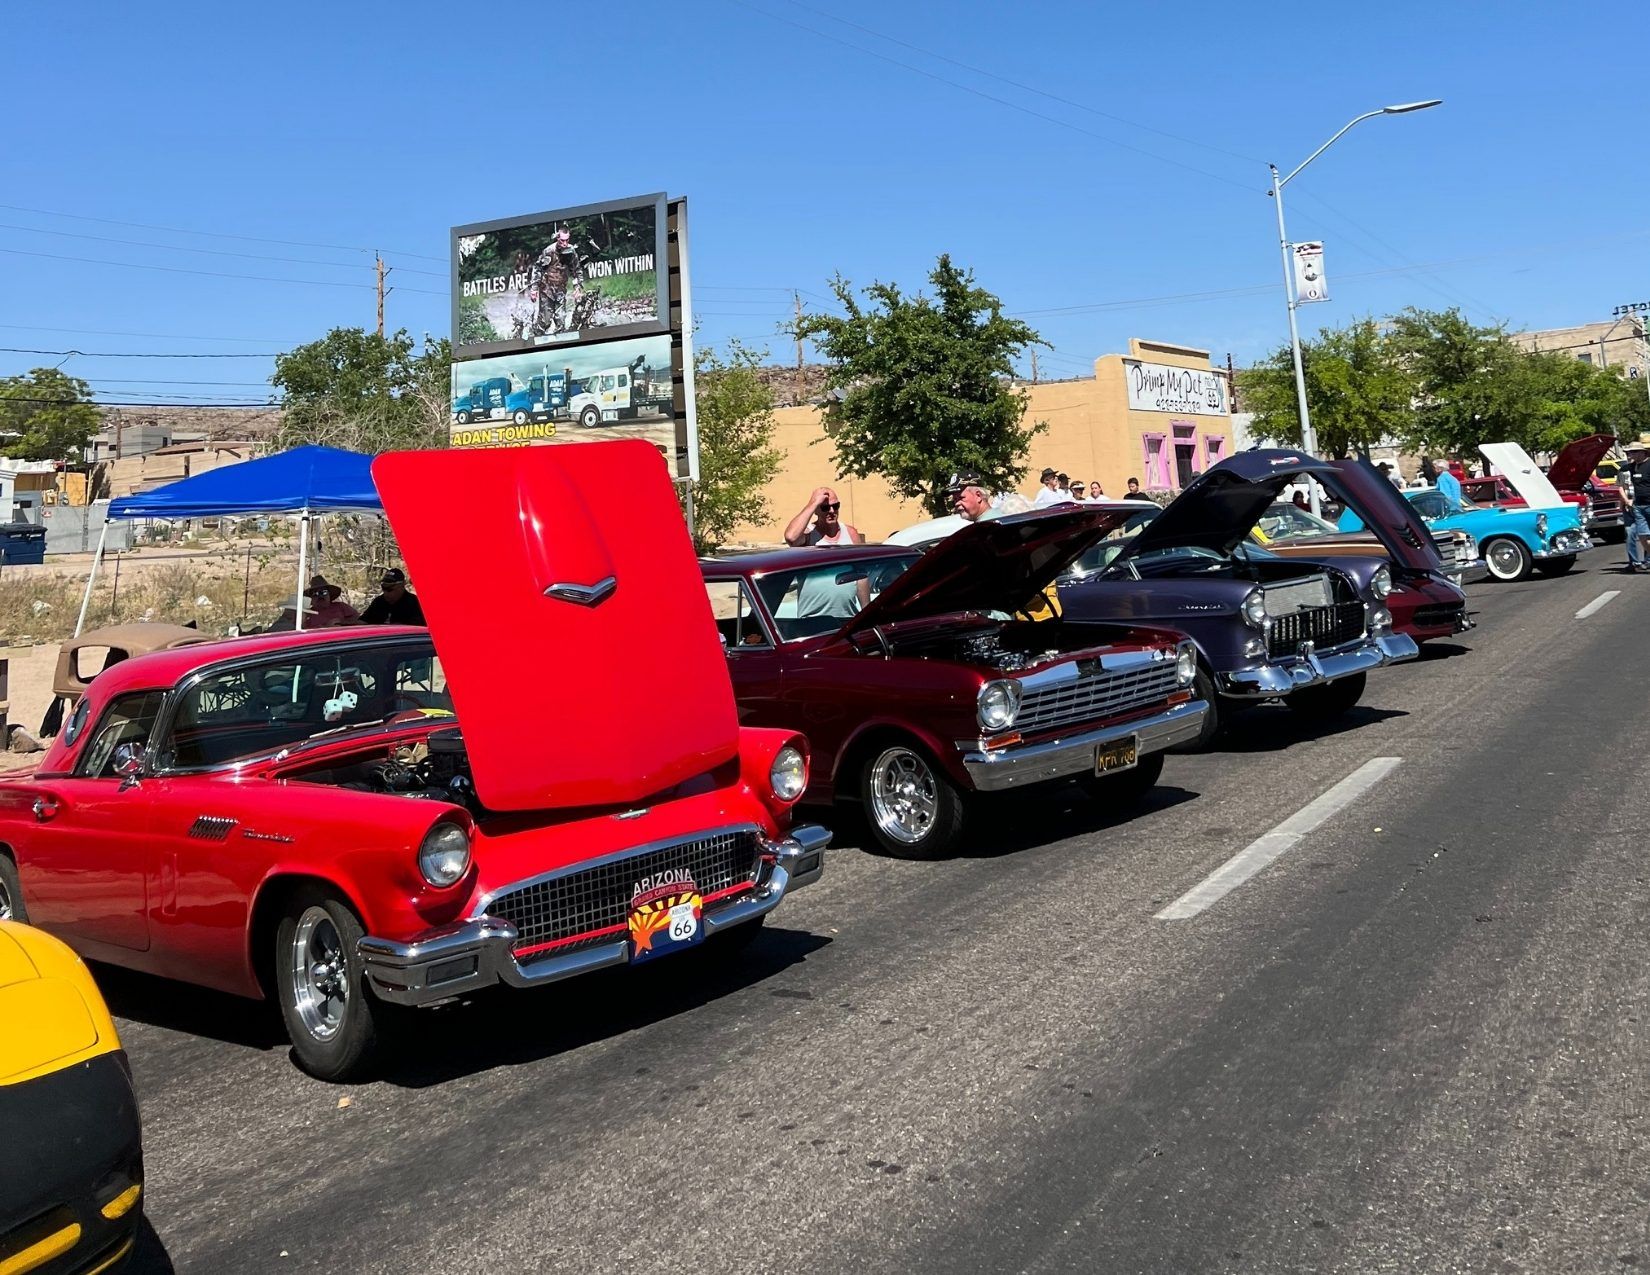 Muscle Cars lined up on the street for the Fun Run in Kingman Arizona